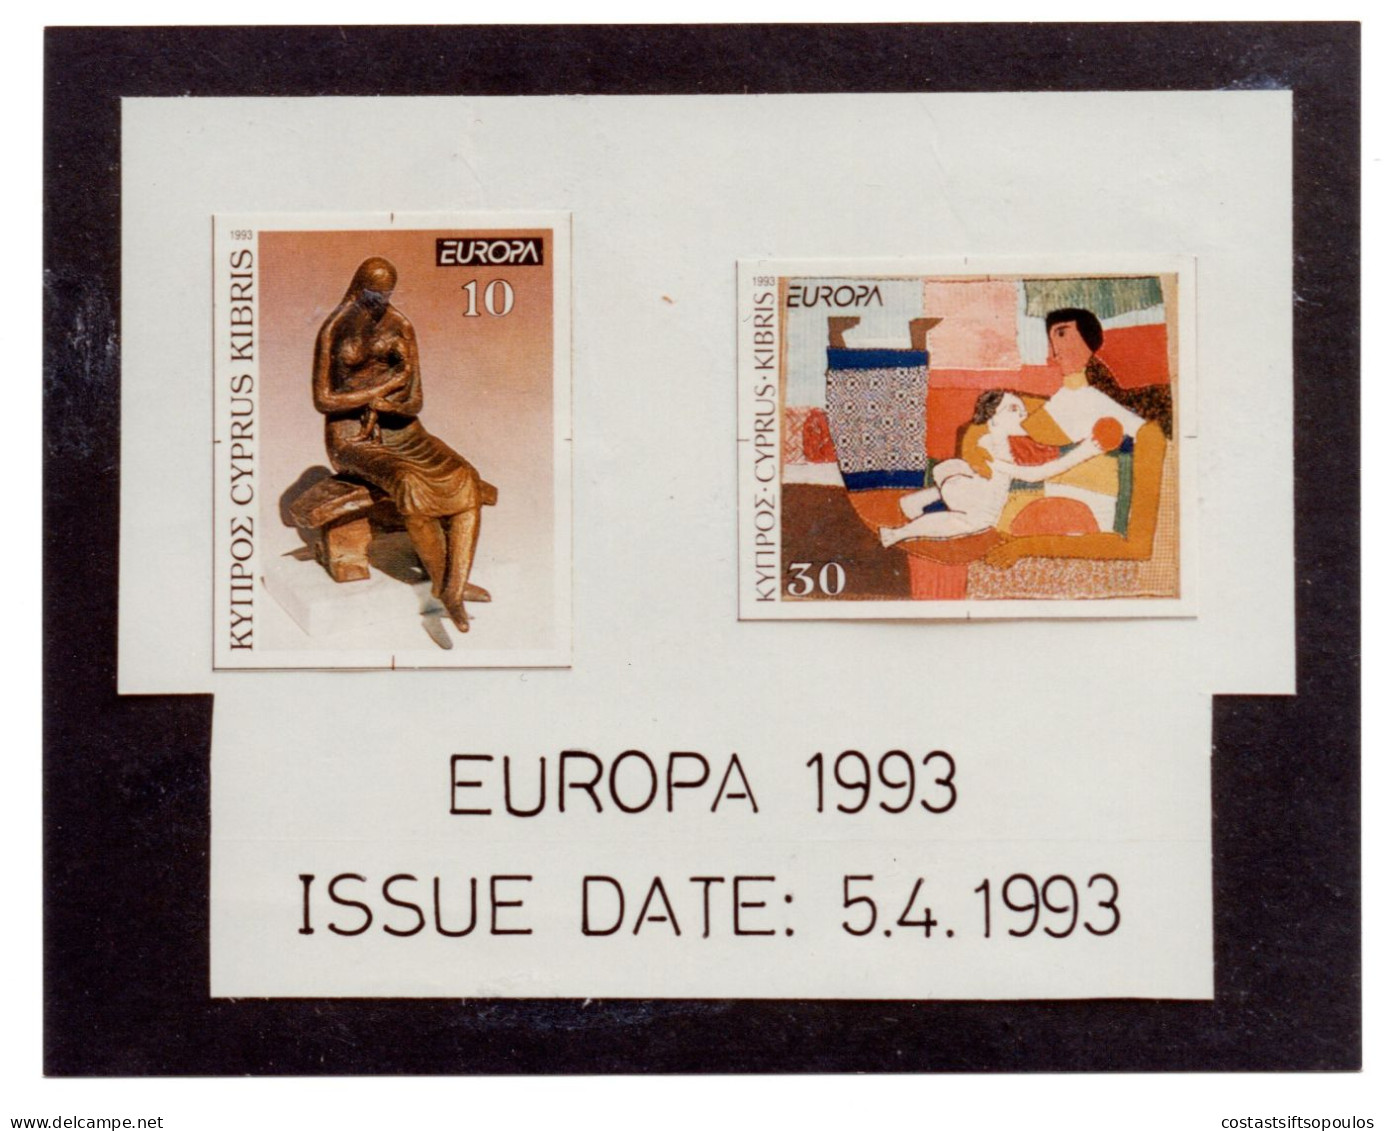 2496. CYPRUS 1993 EUROPA UNIDENTIFIED ITEM/PHOTO - Briefe U. Dokumente